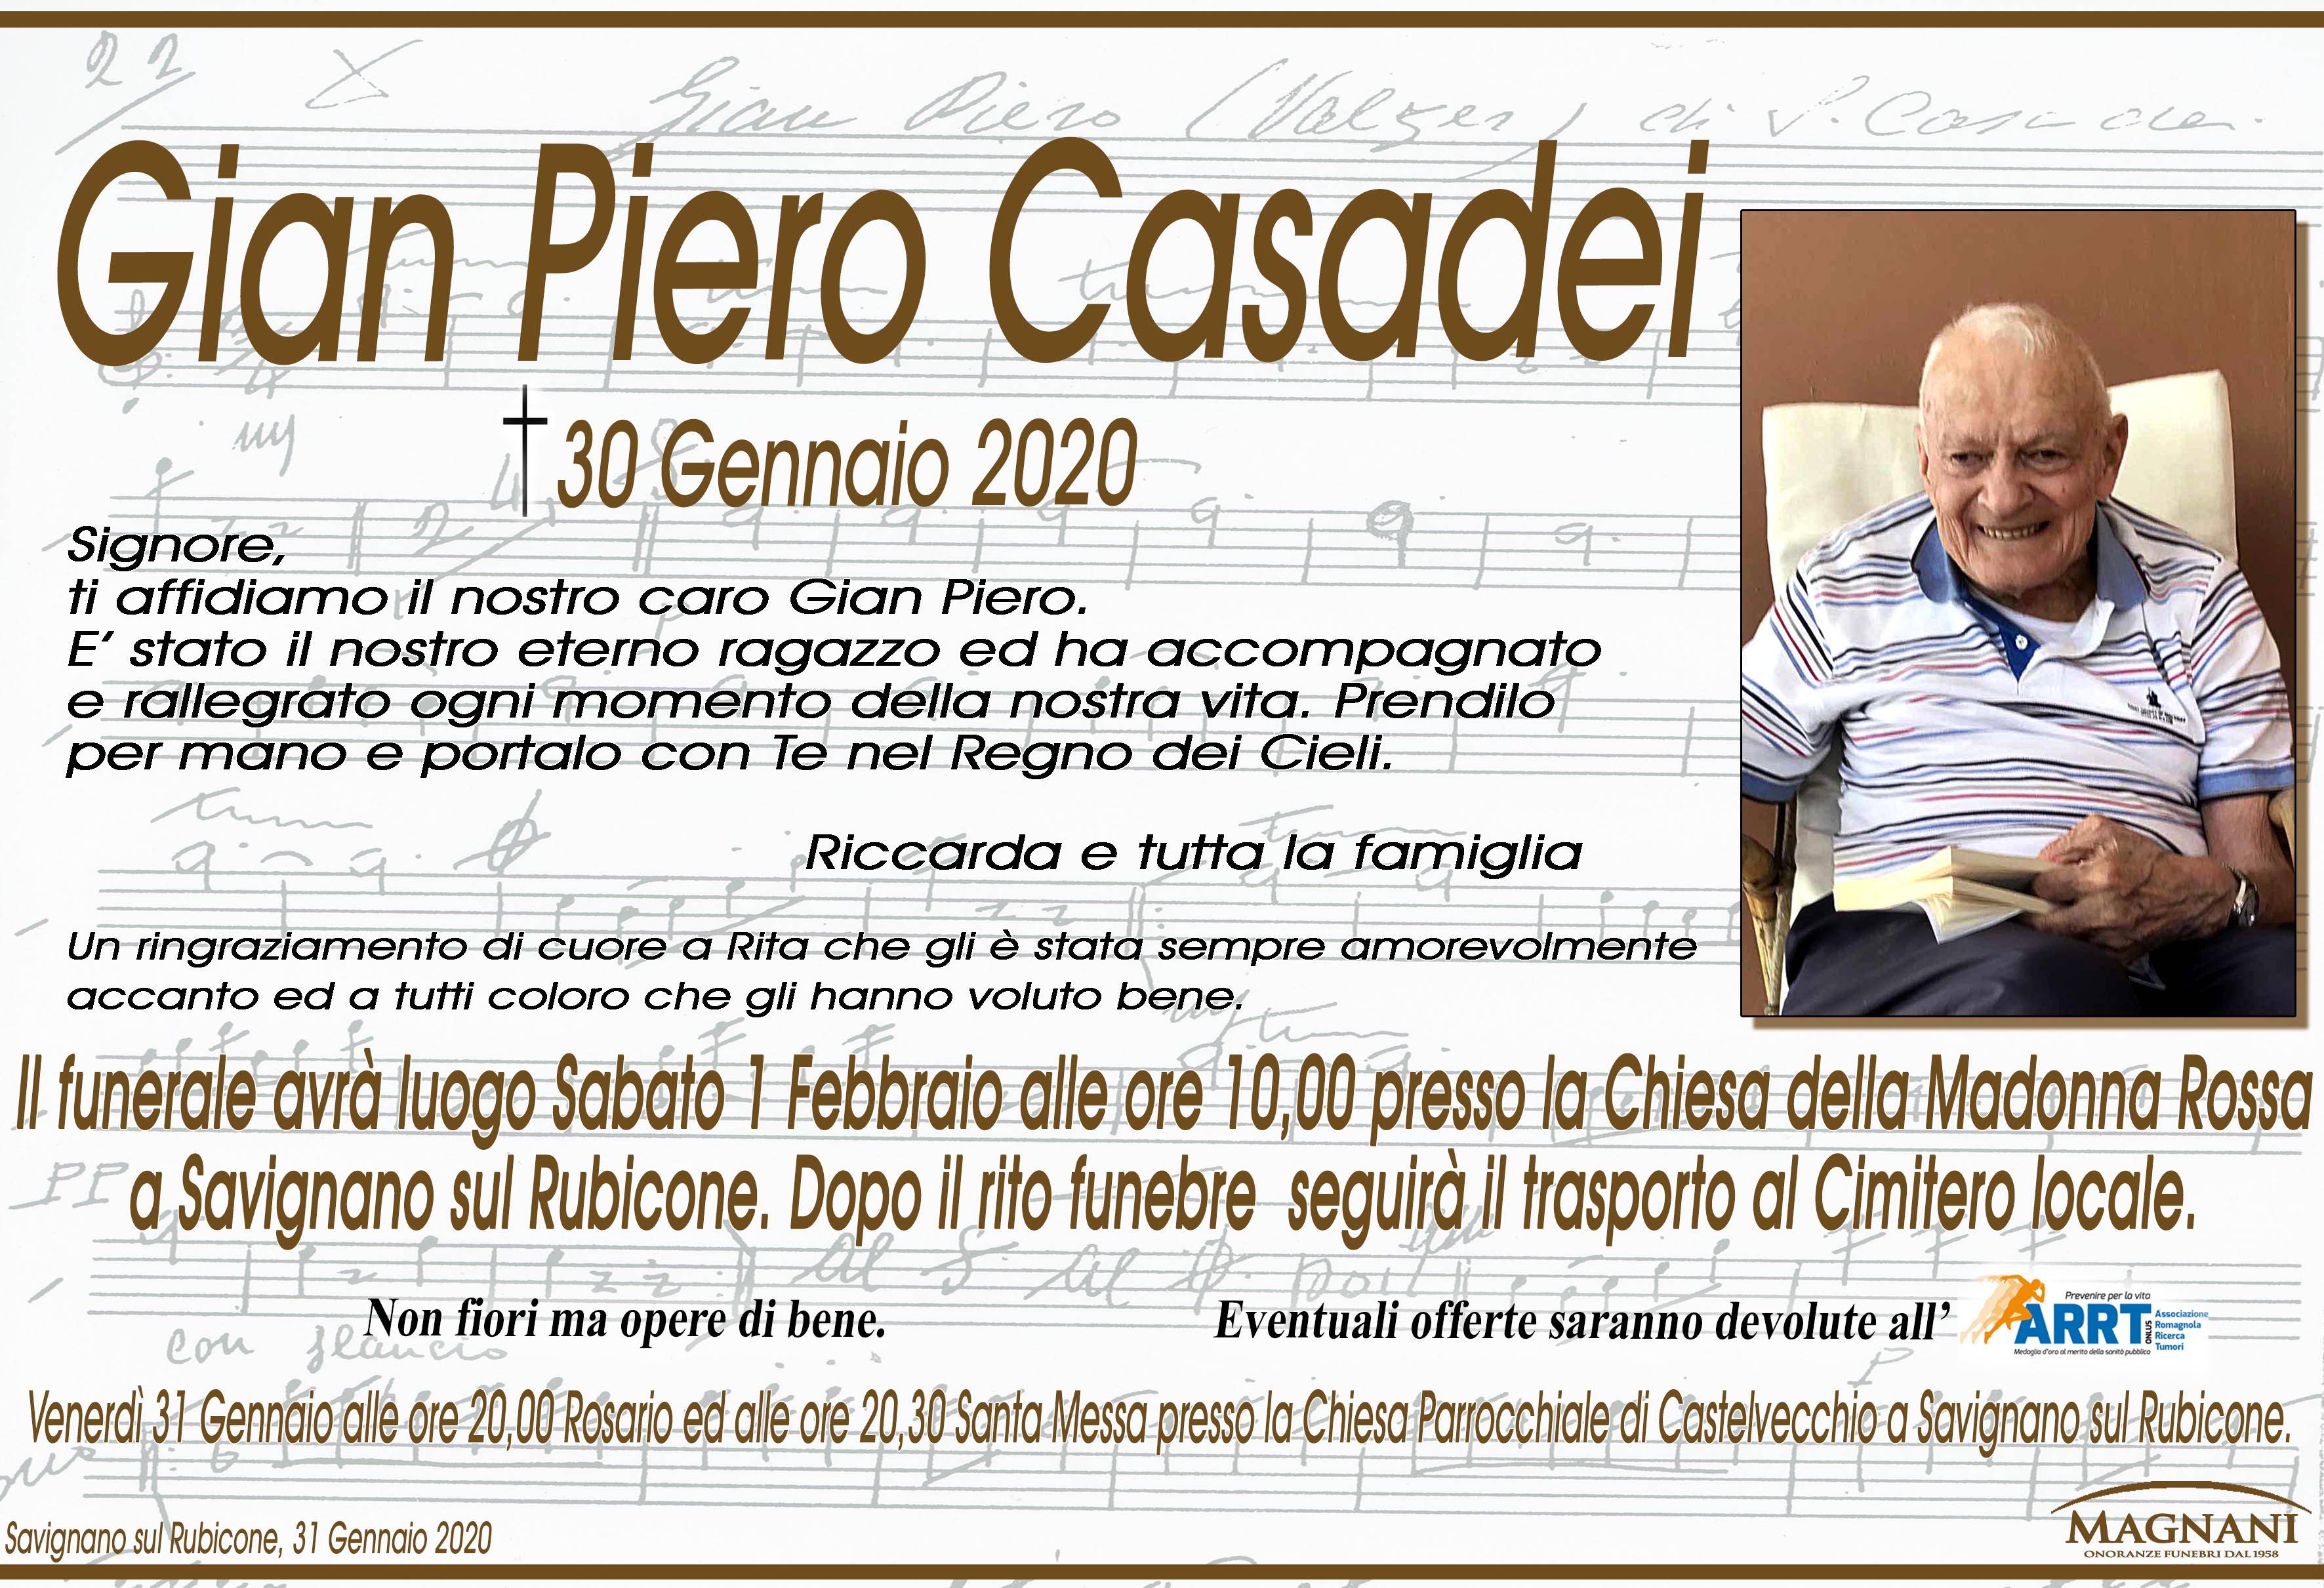 Gian Piero Casadei